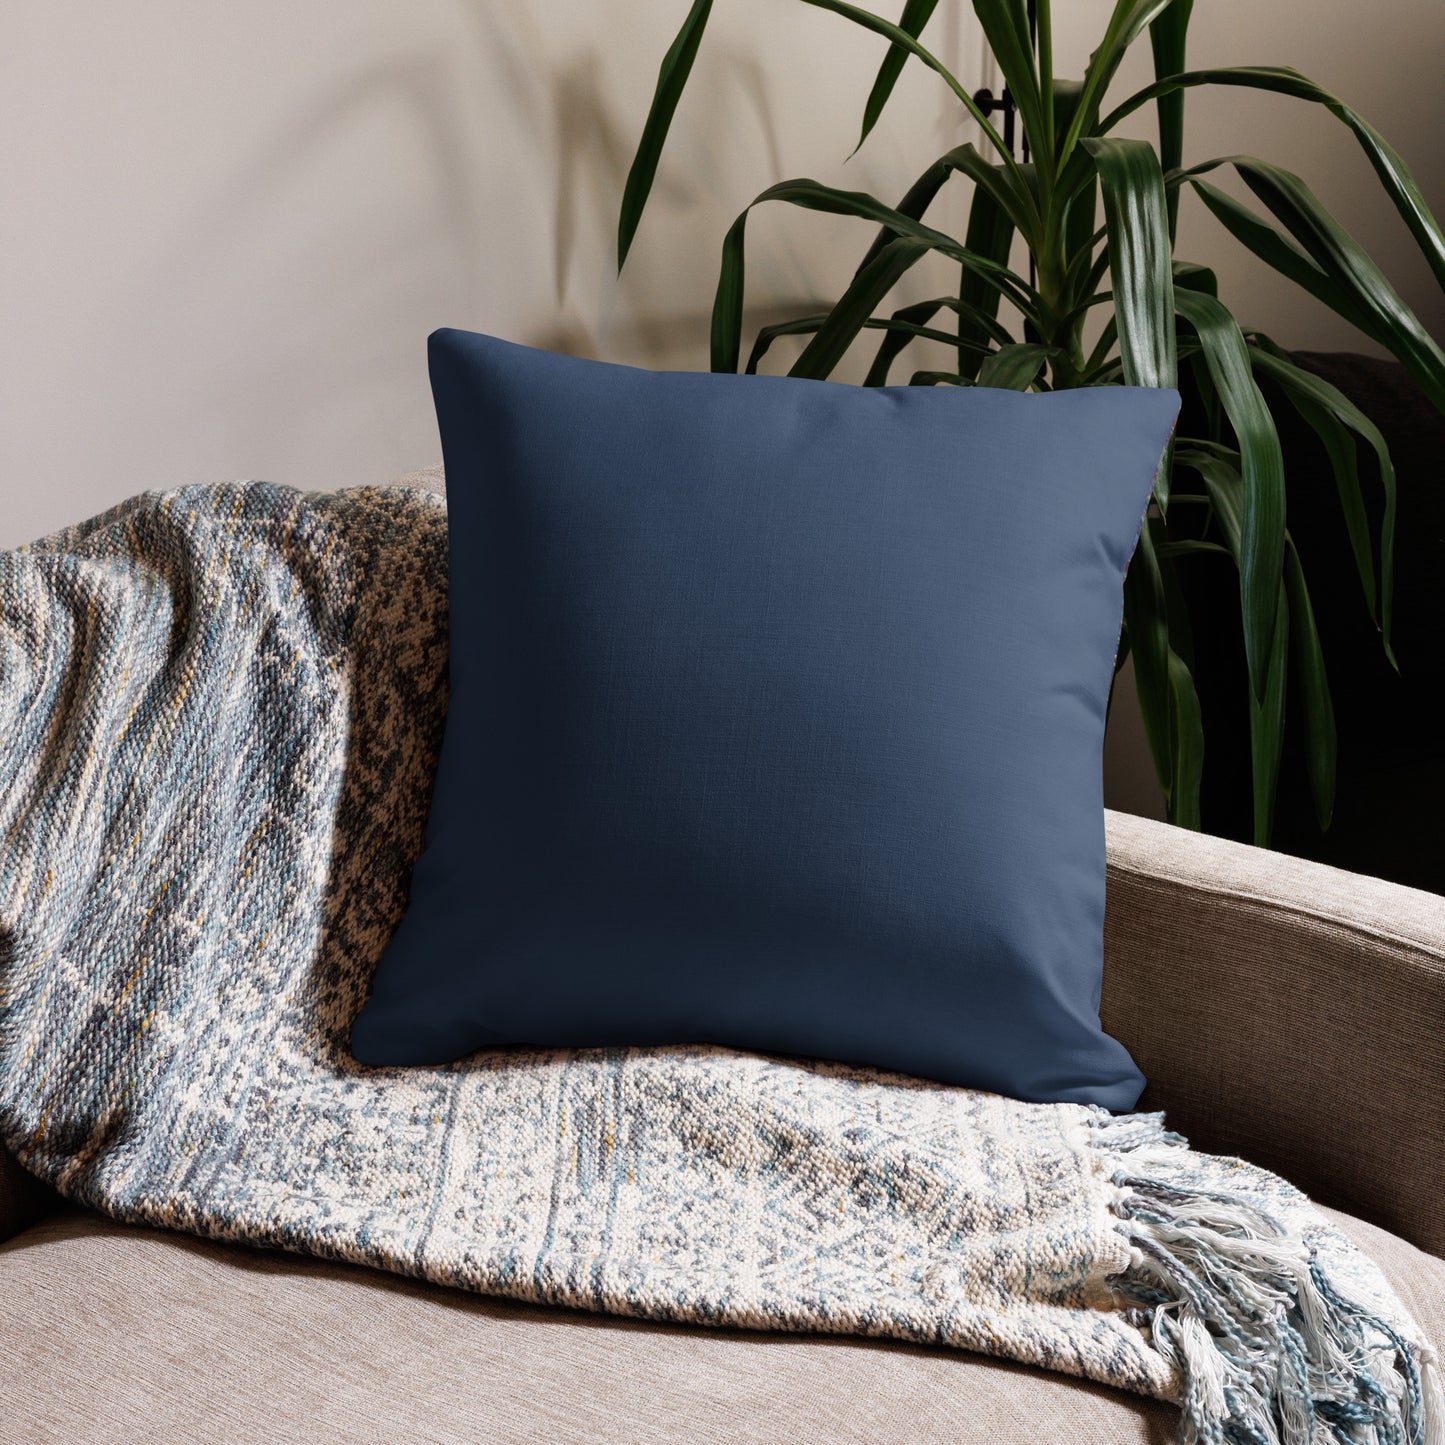 Multnomah Falls - Premium Pillow